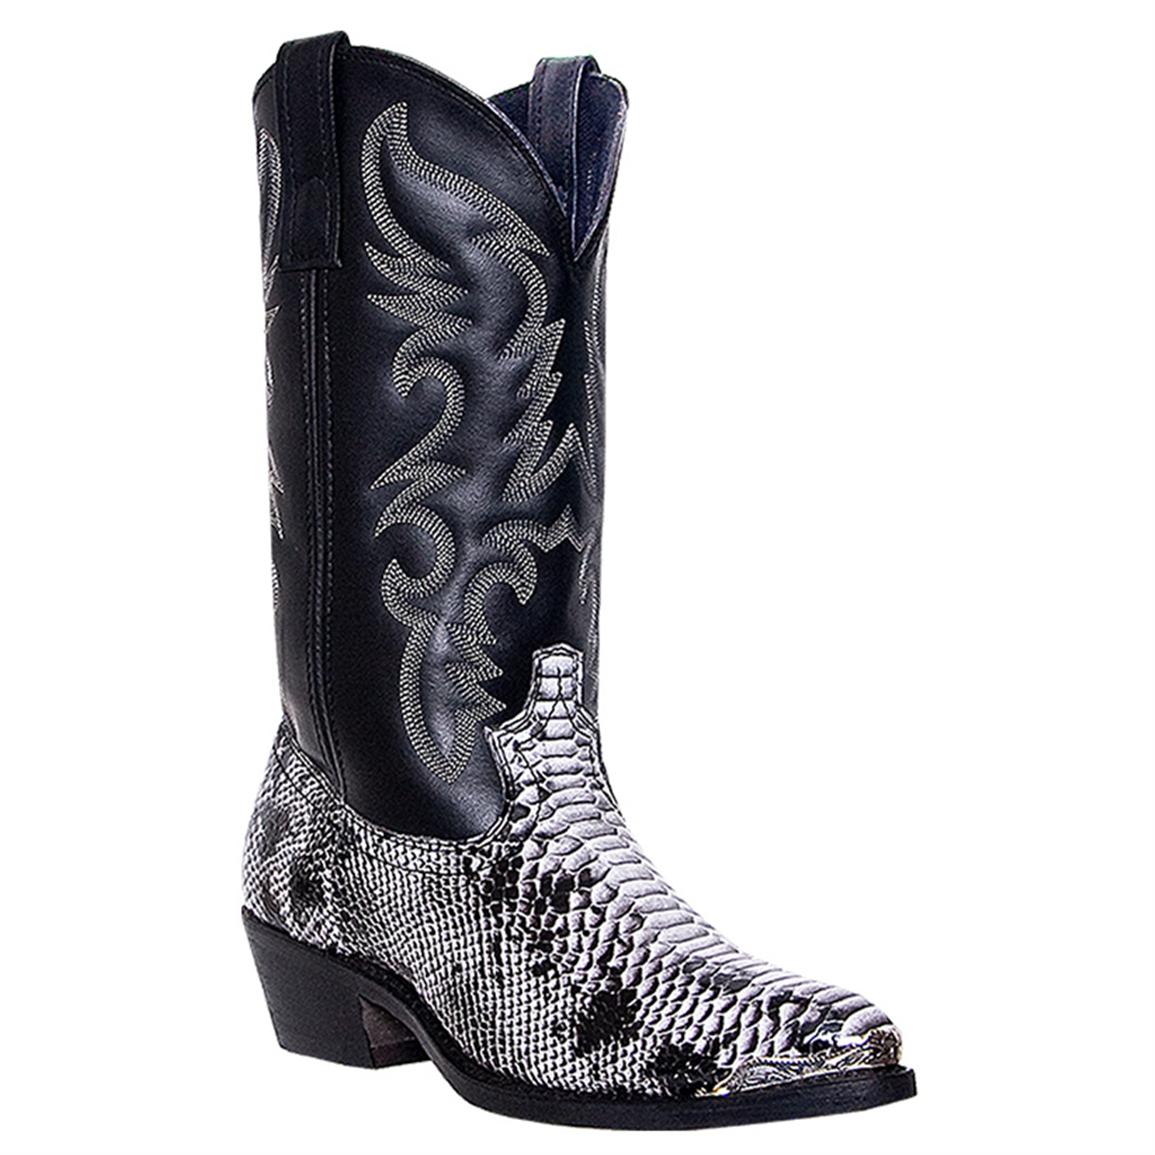 Laredo Men's Monty Western Boots, Black / White